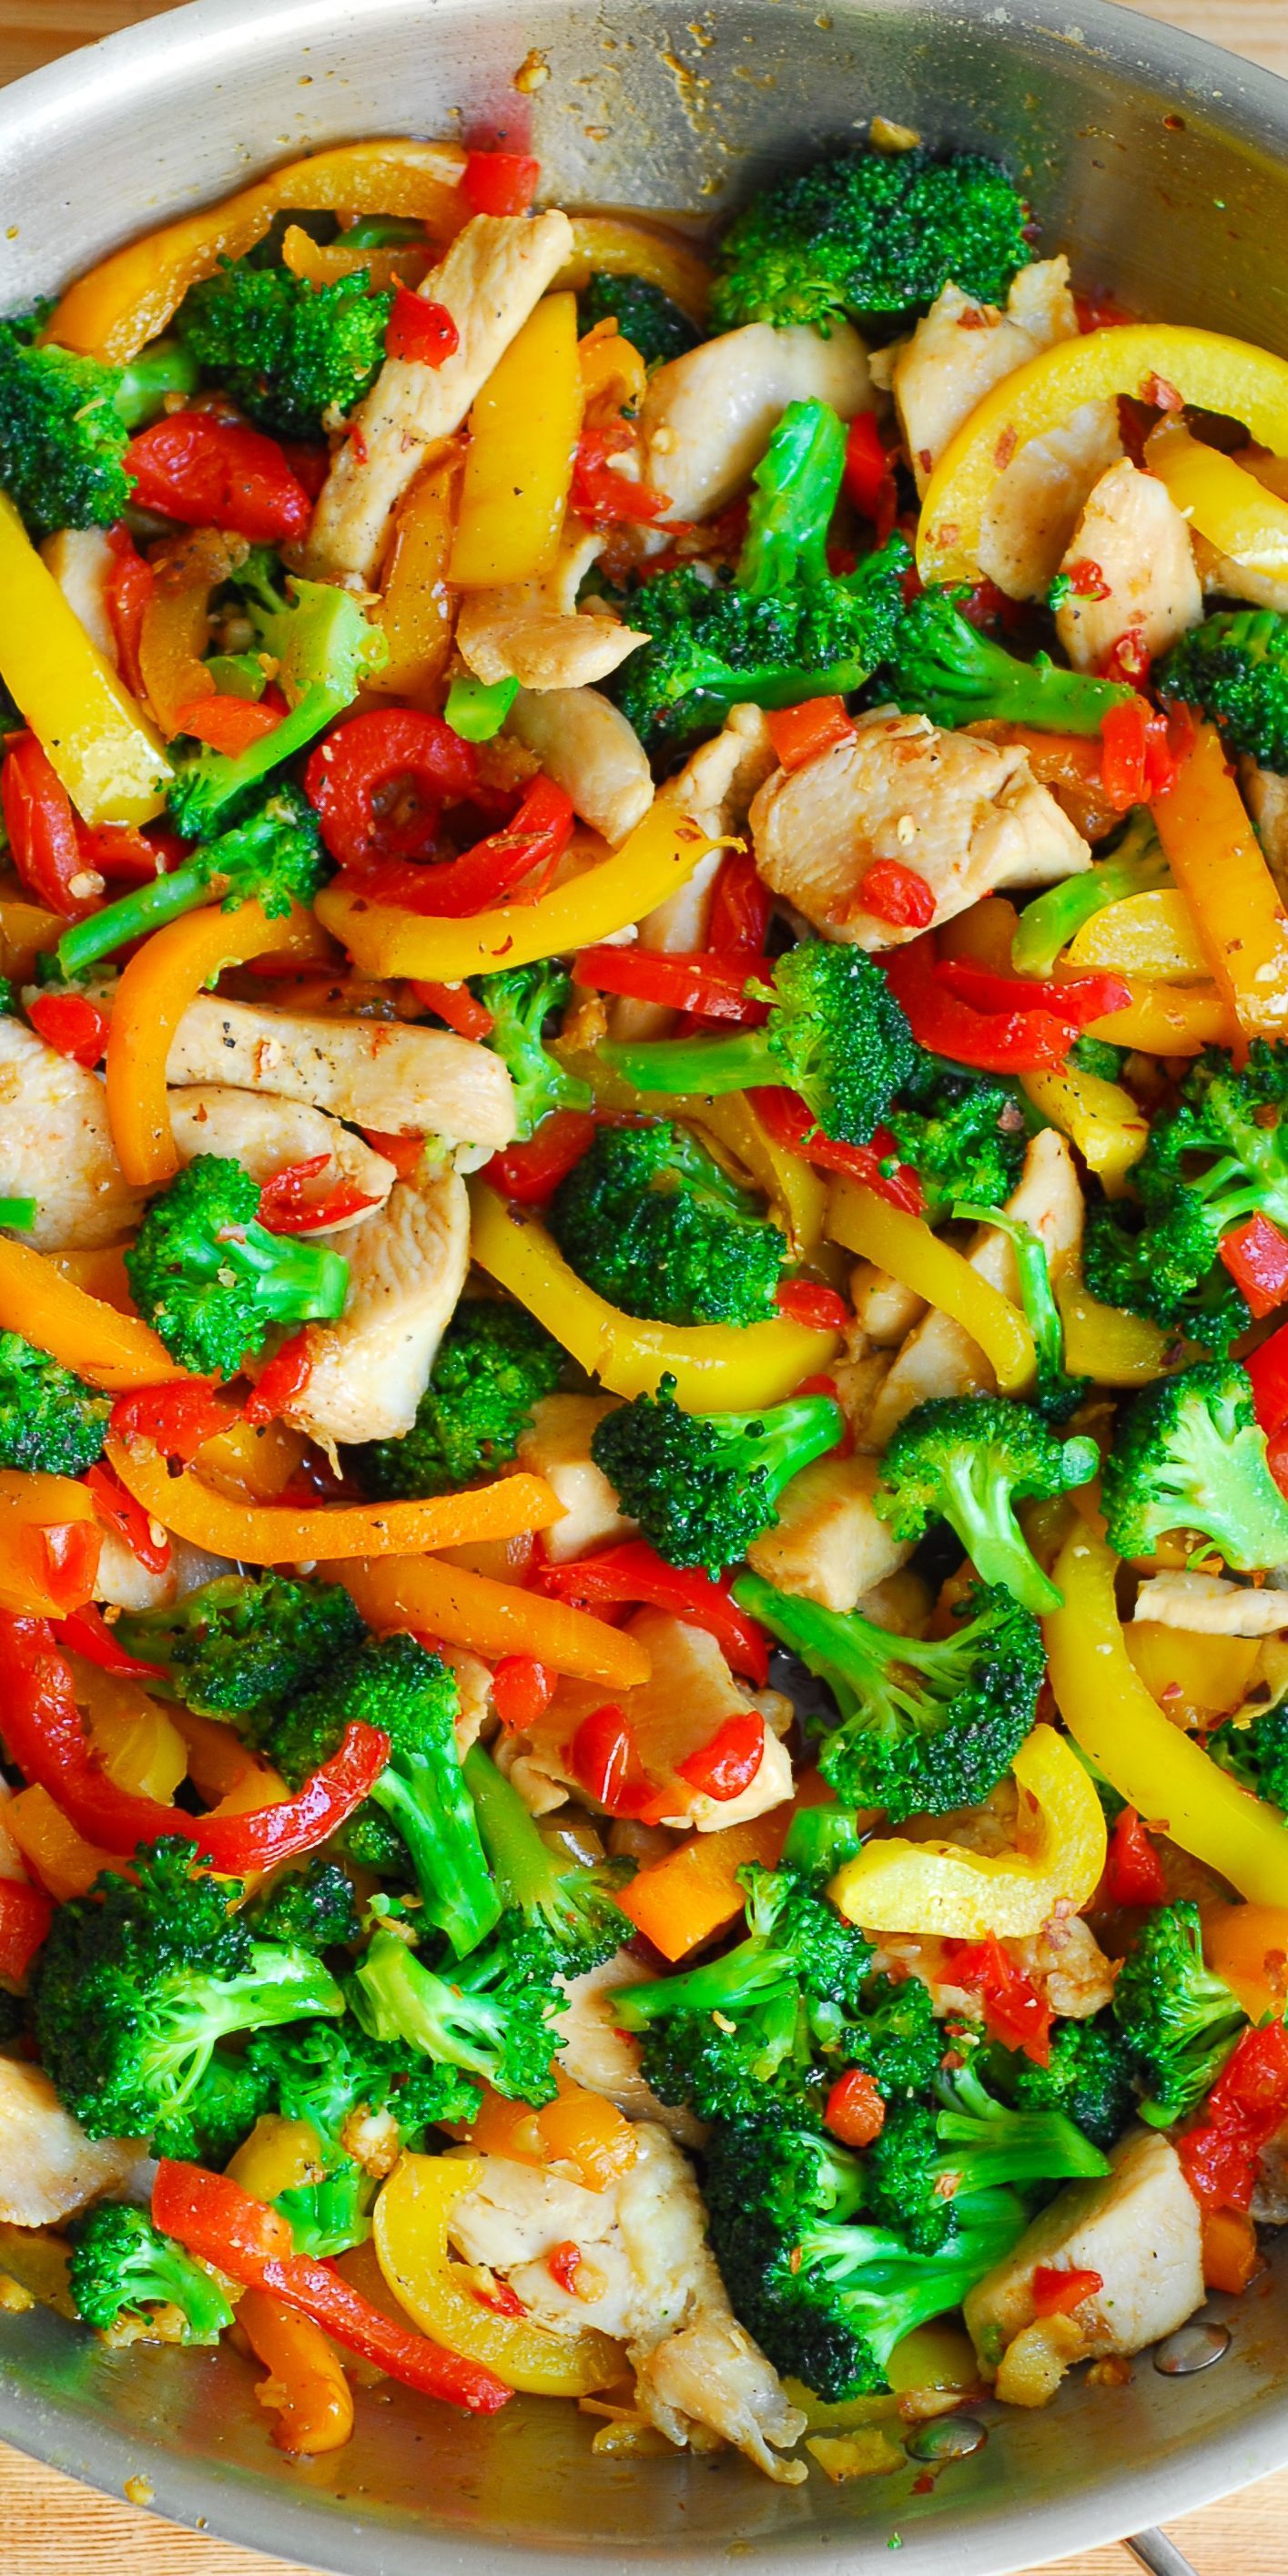 Chicken and Vegetables Stir Fry -   21 healthy recipes Broccoli brown sugar ideas